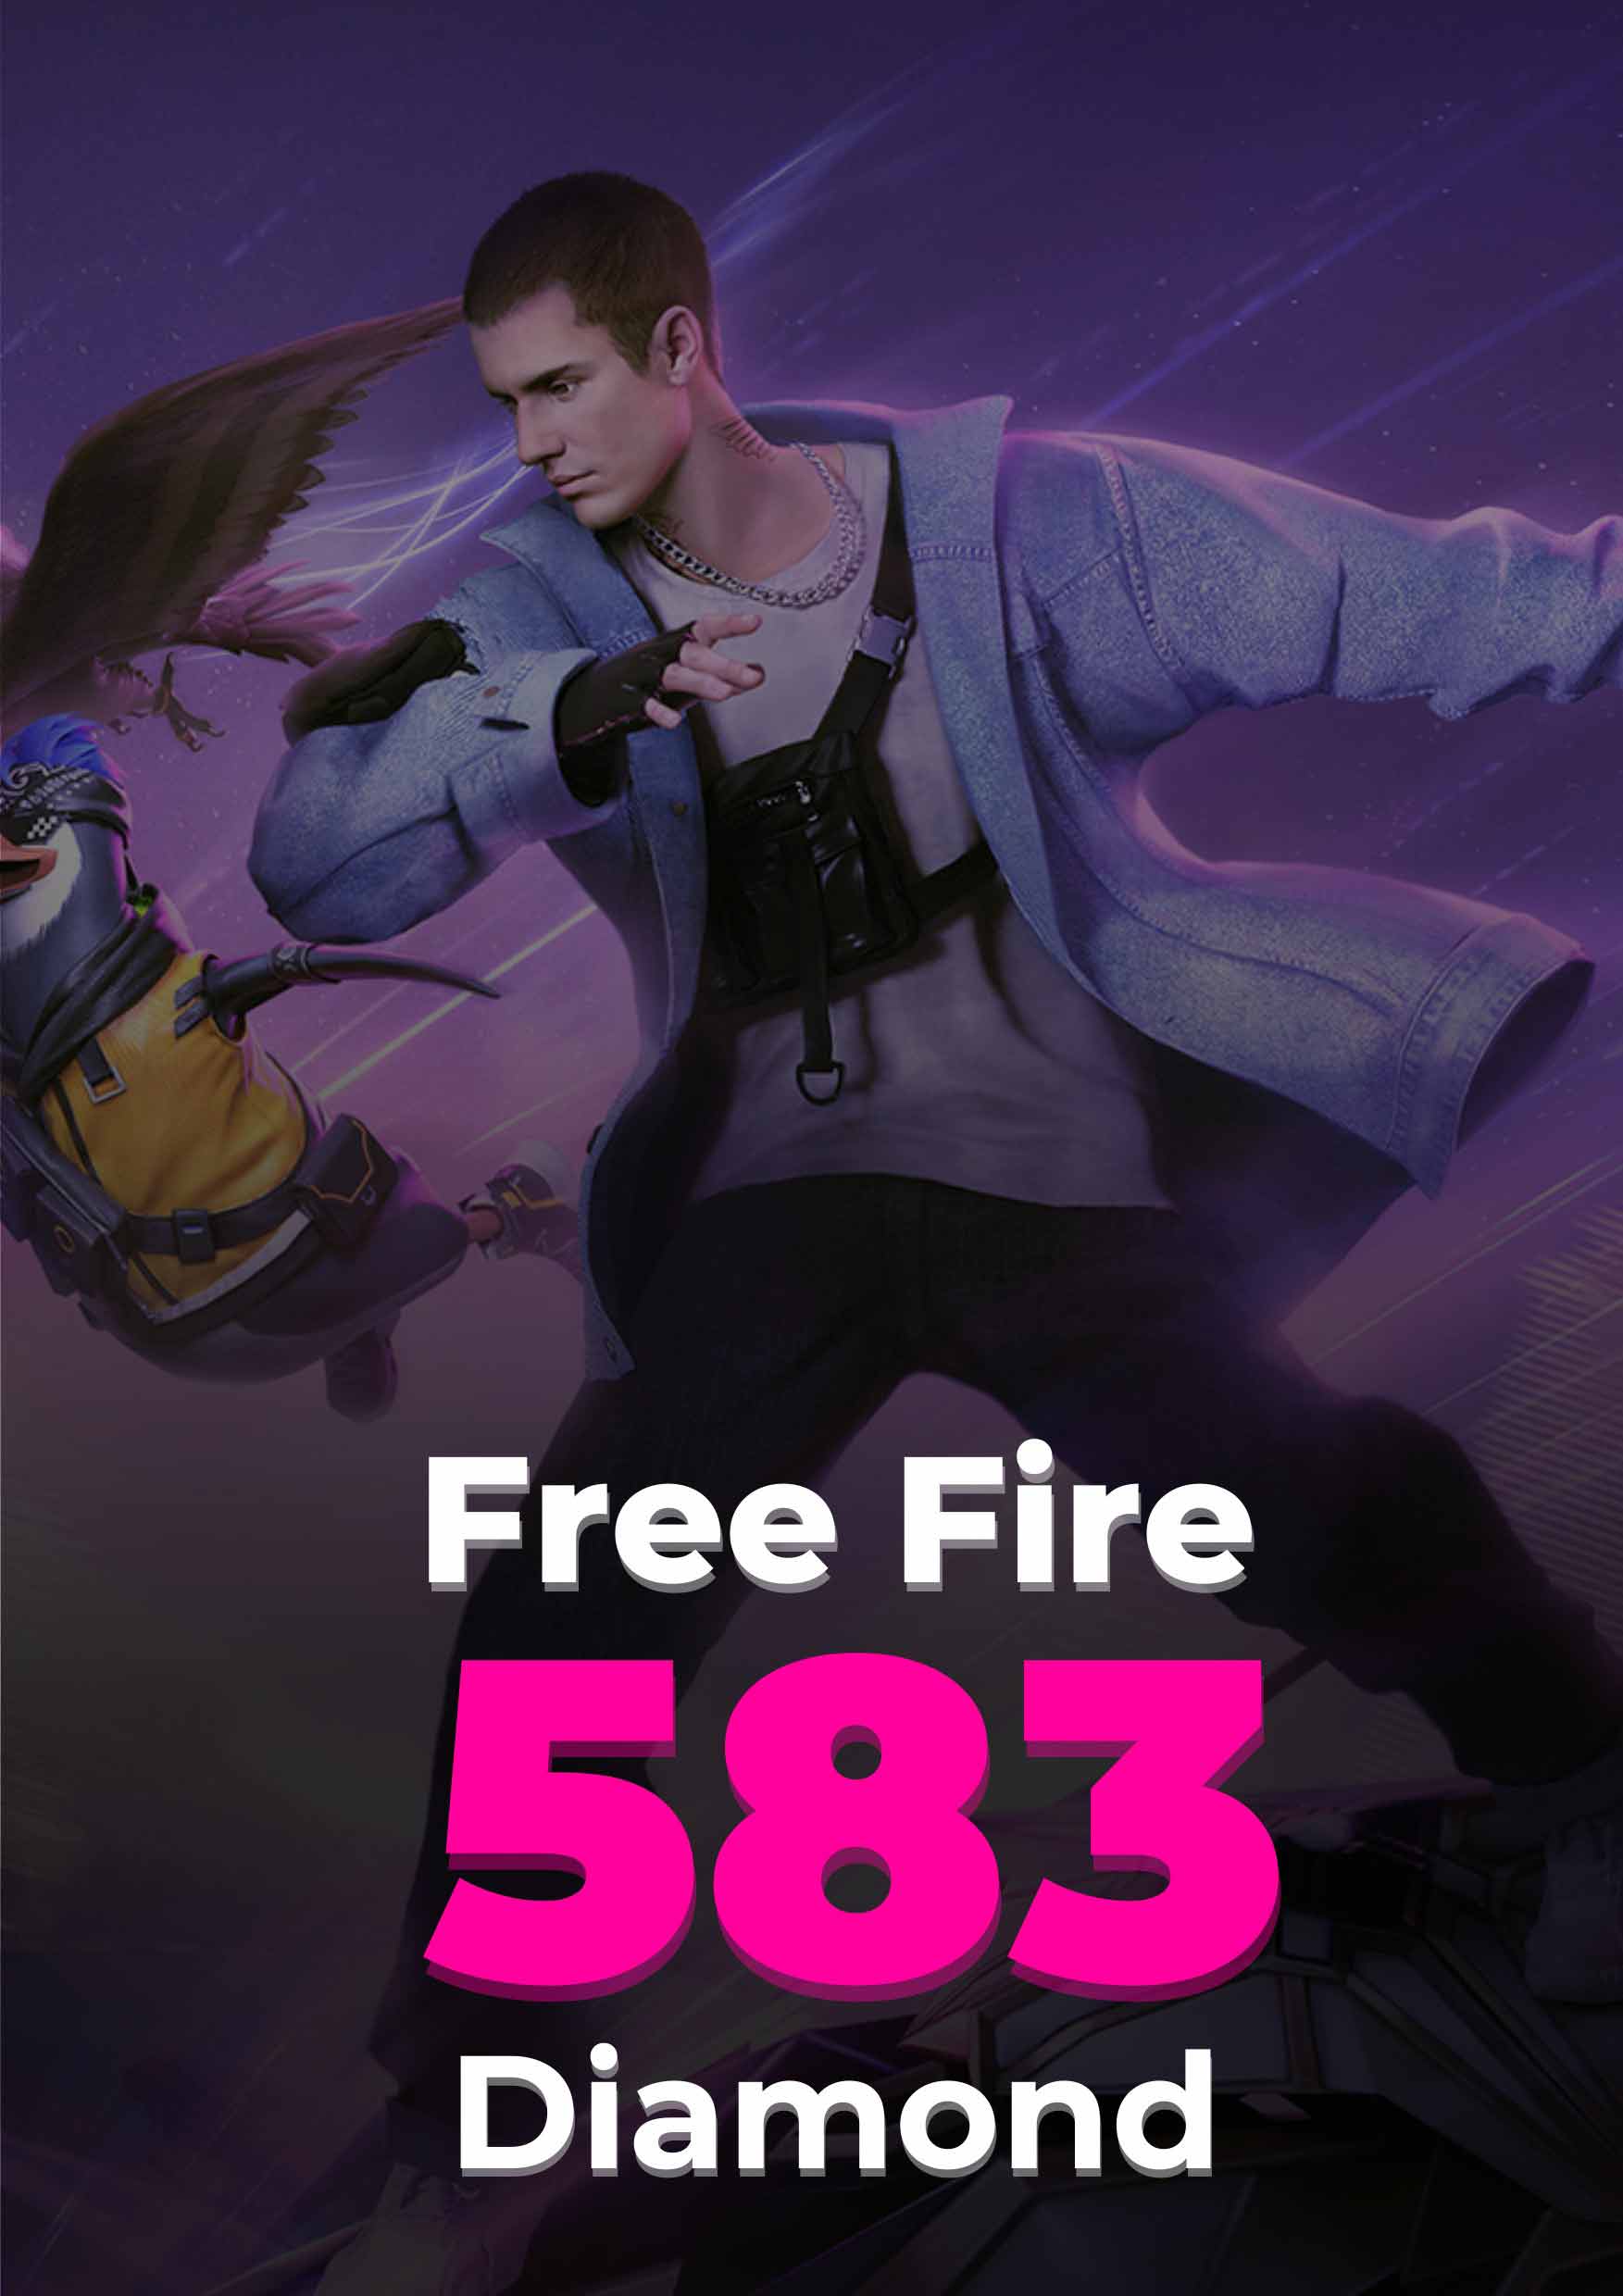 Free Fire 530 + 53 Diamond